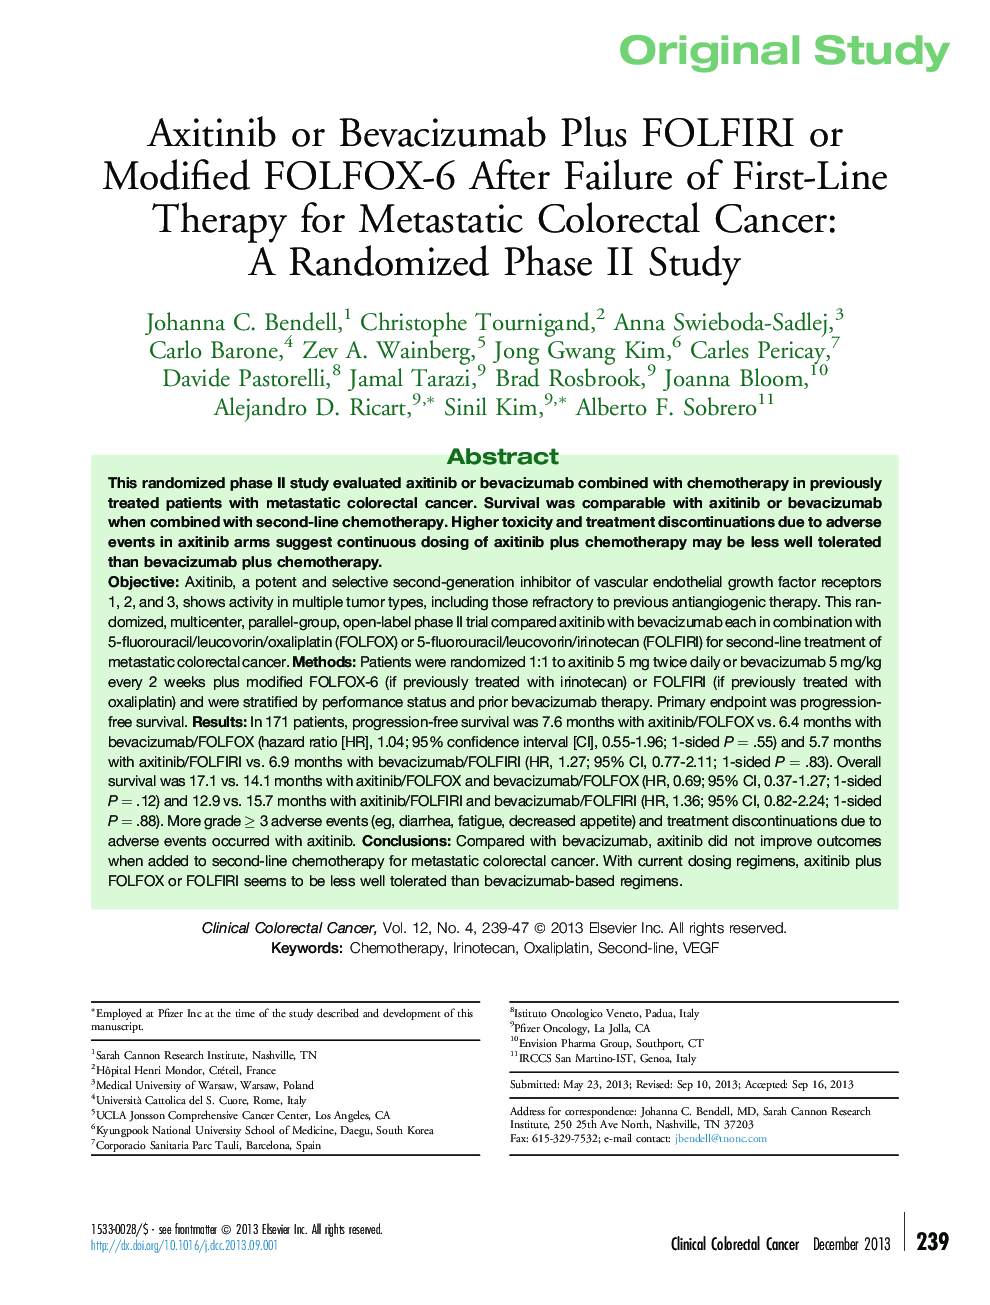 Axitinib or Bevacizumab Plus FOLFIRI or Modified FOLFOX-6 After Failure of First-Line Therapy for Metastatic Colorectal Cancer: A Randomized Phase II Study